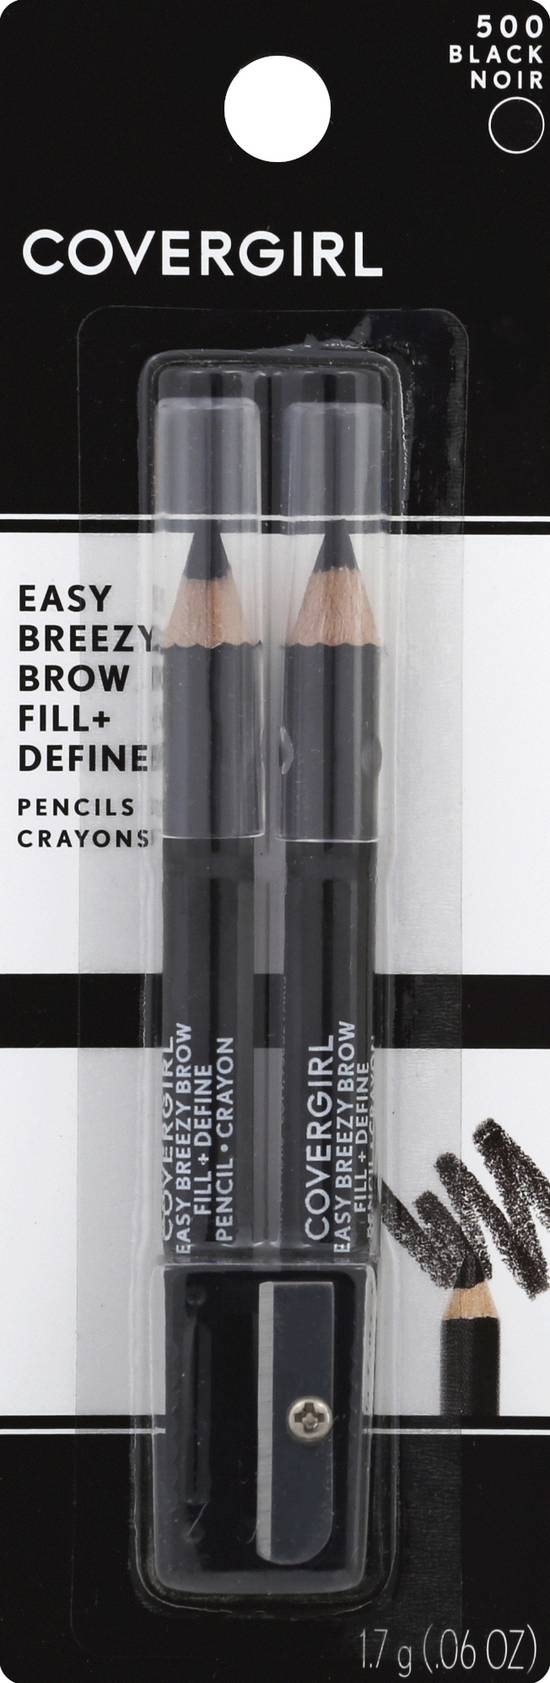 Covergirl 500 Black Brow Pencils (2 ct)